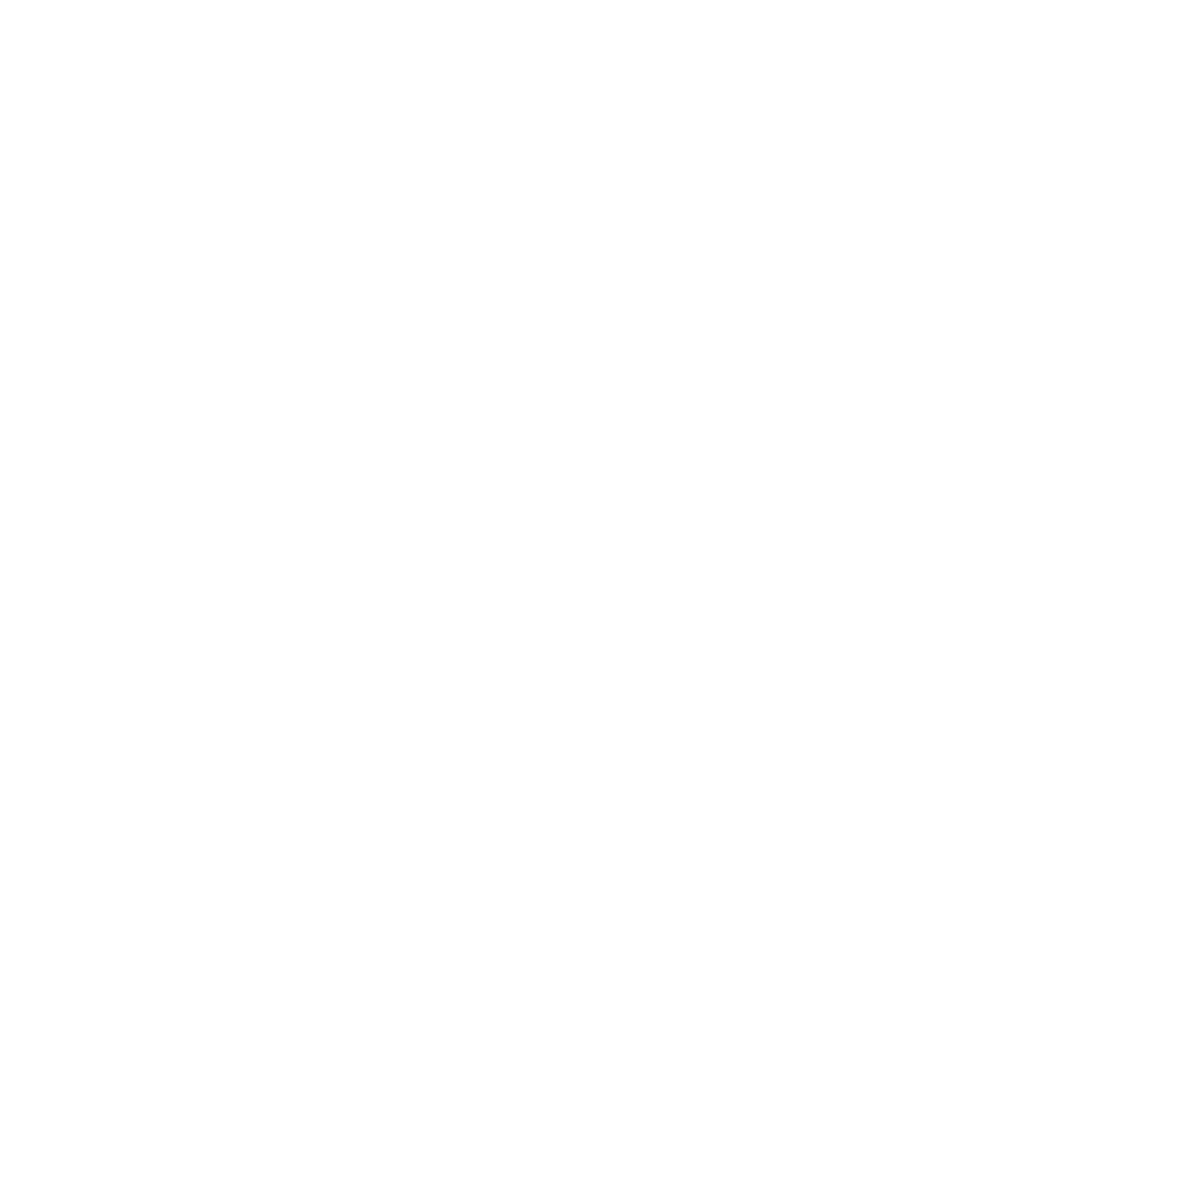 Collierville church of Christ in Collierville, TN